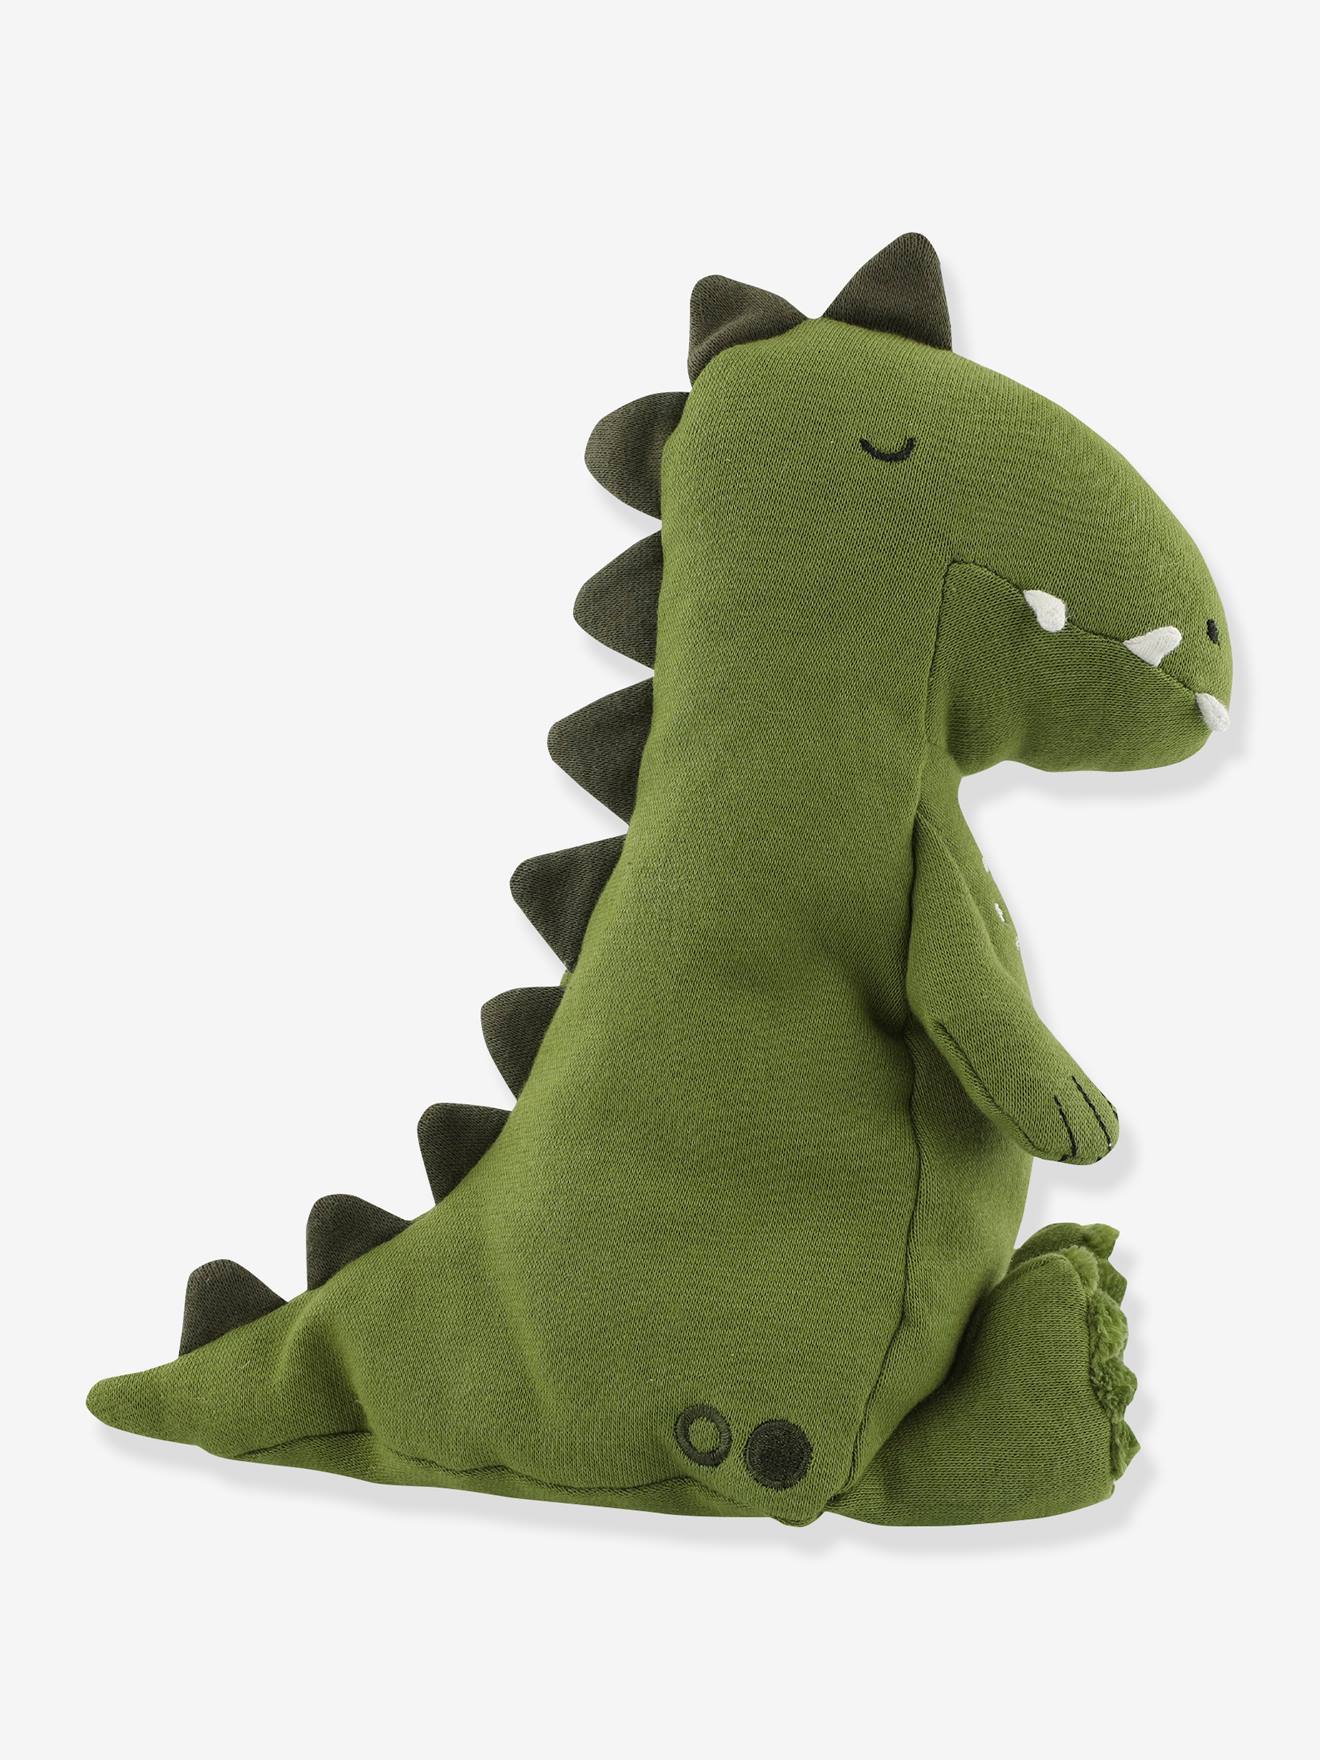 Green dinosaur soft toy